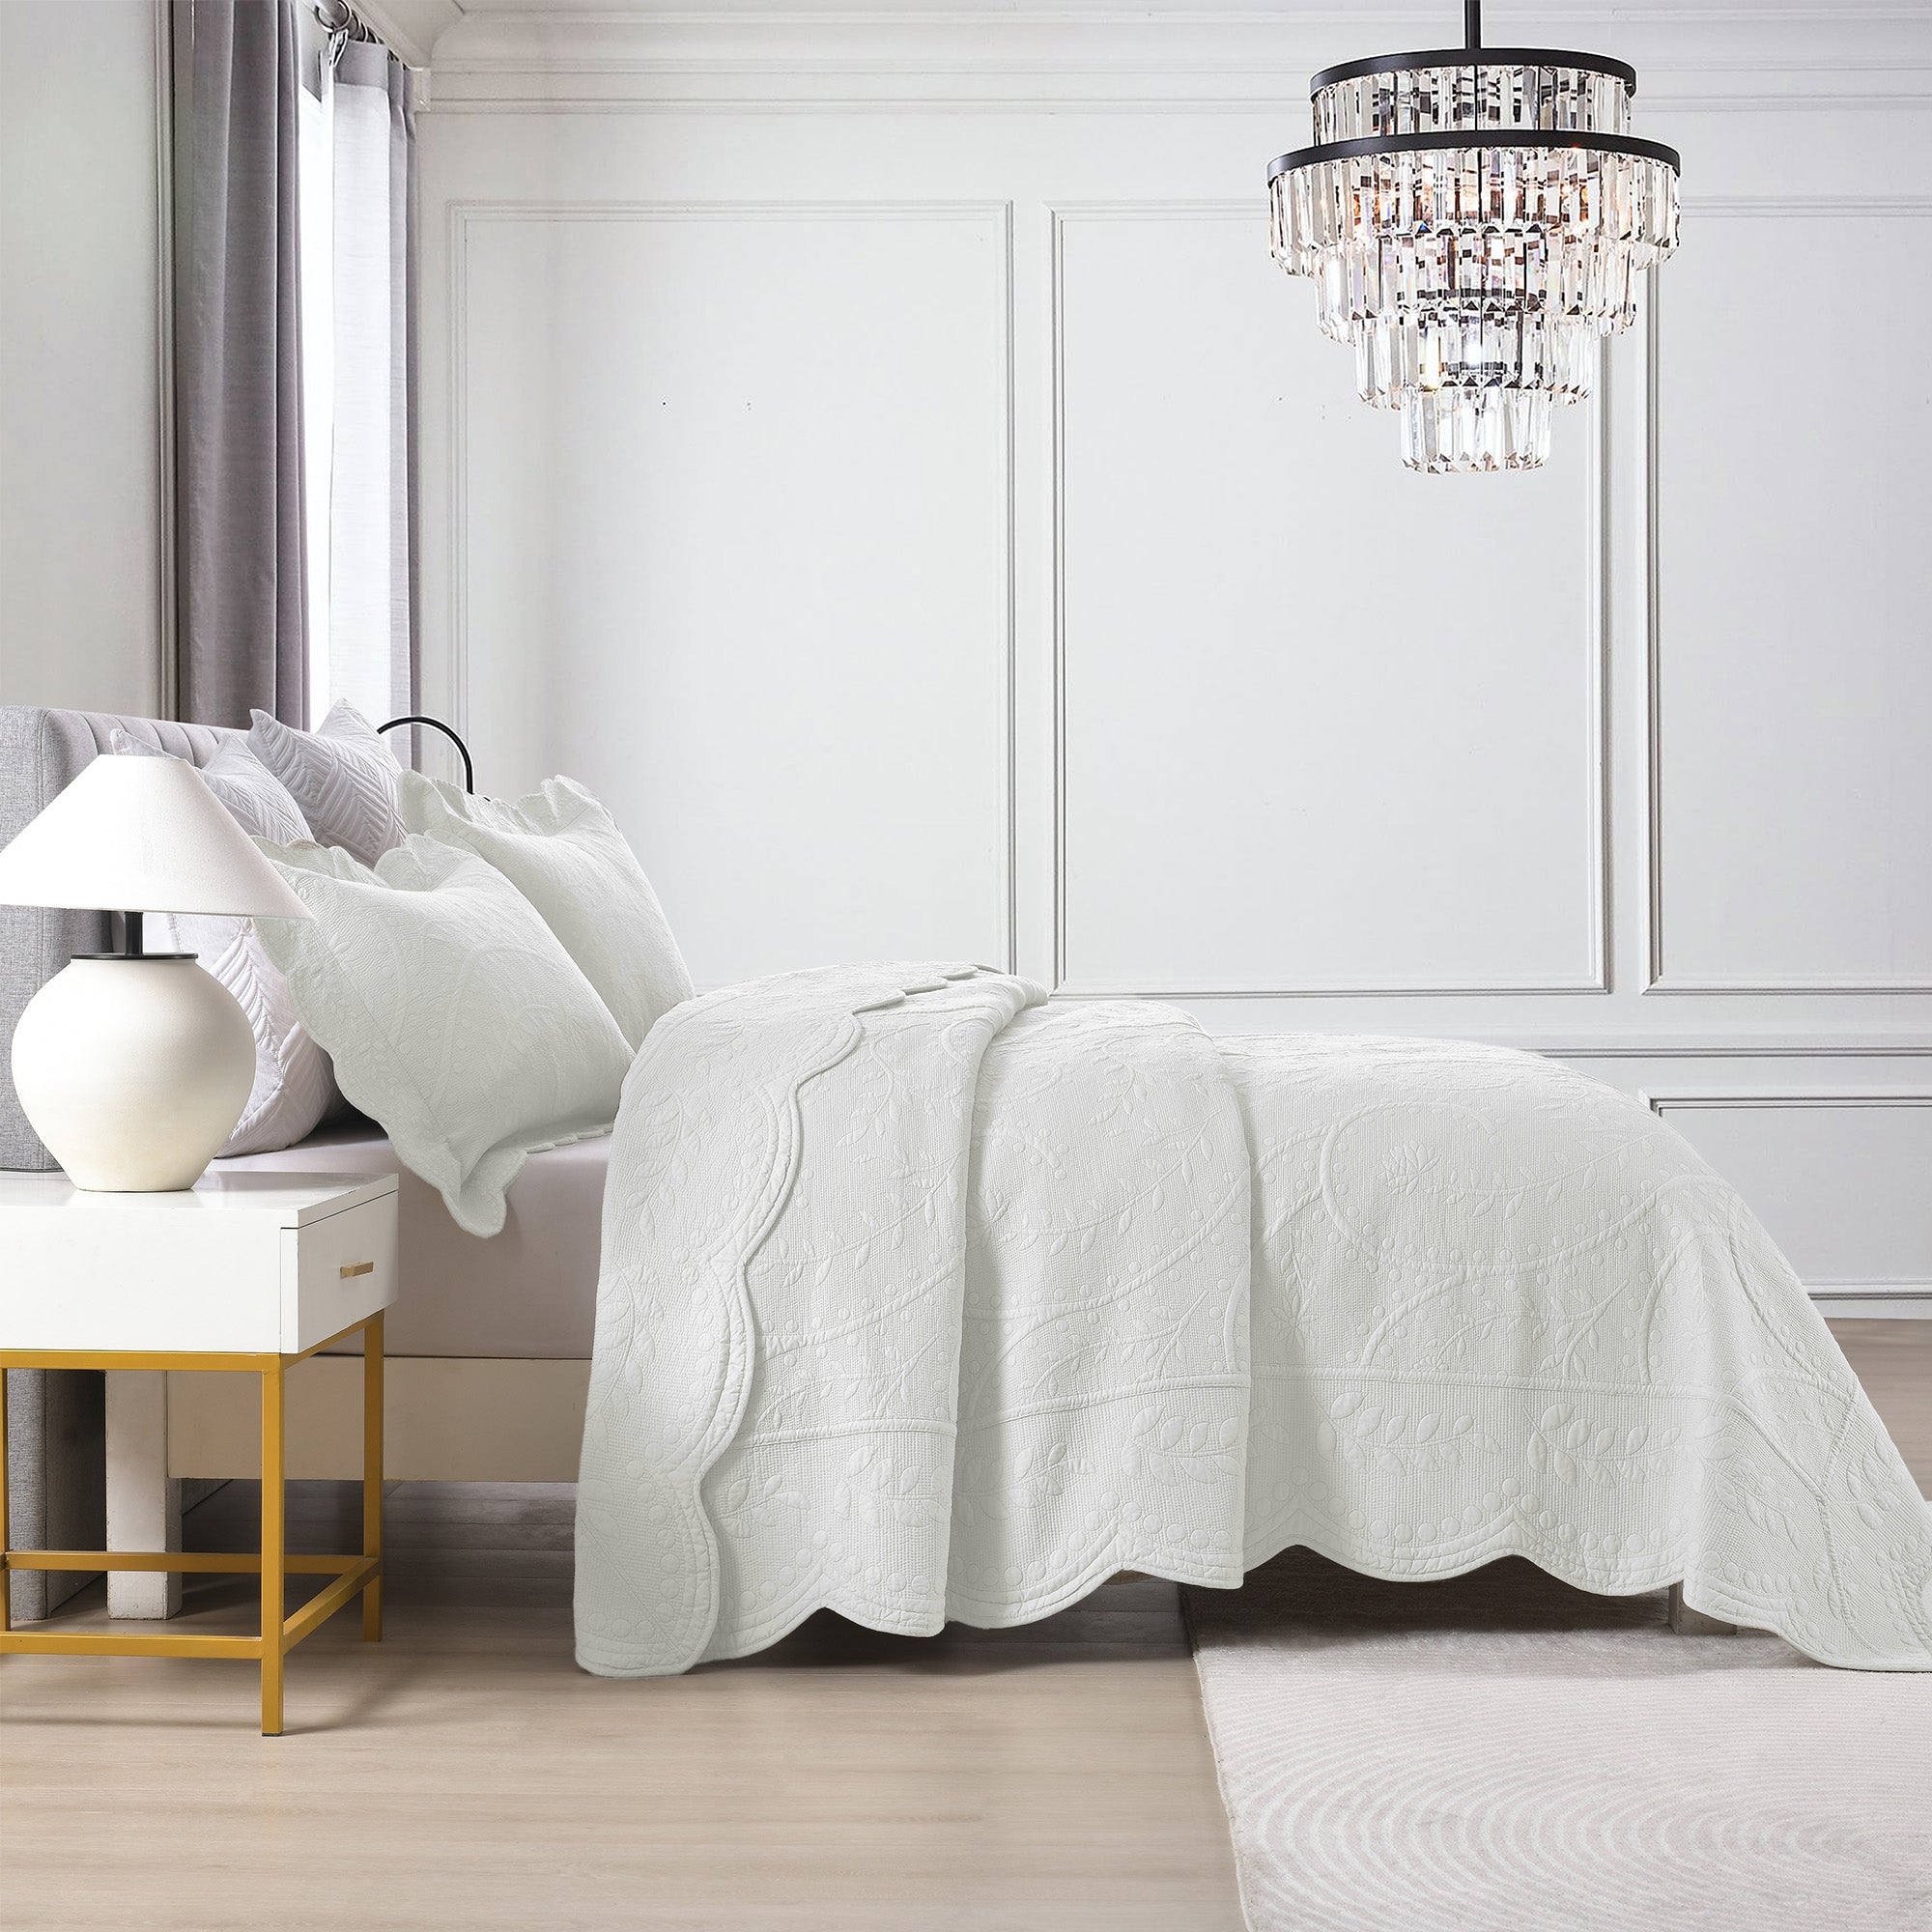 3-Piece Elegantly Embroidered 100% Cotton Oversized Quilt Bedspread Set TX